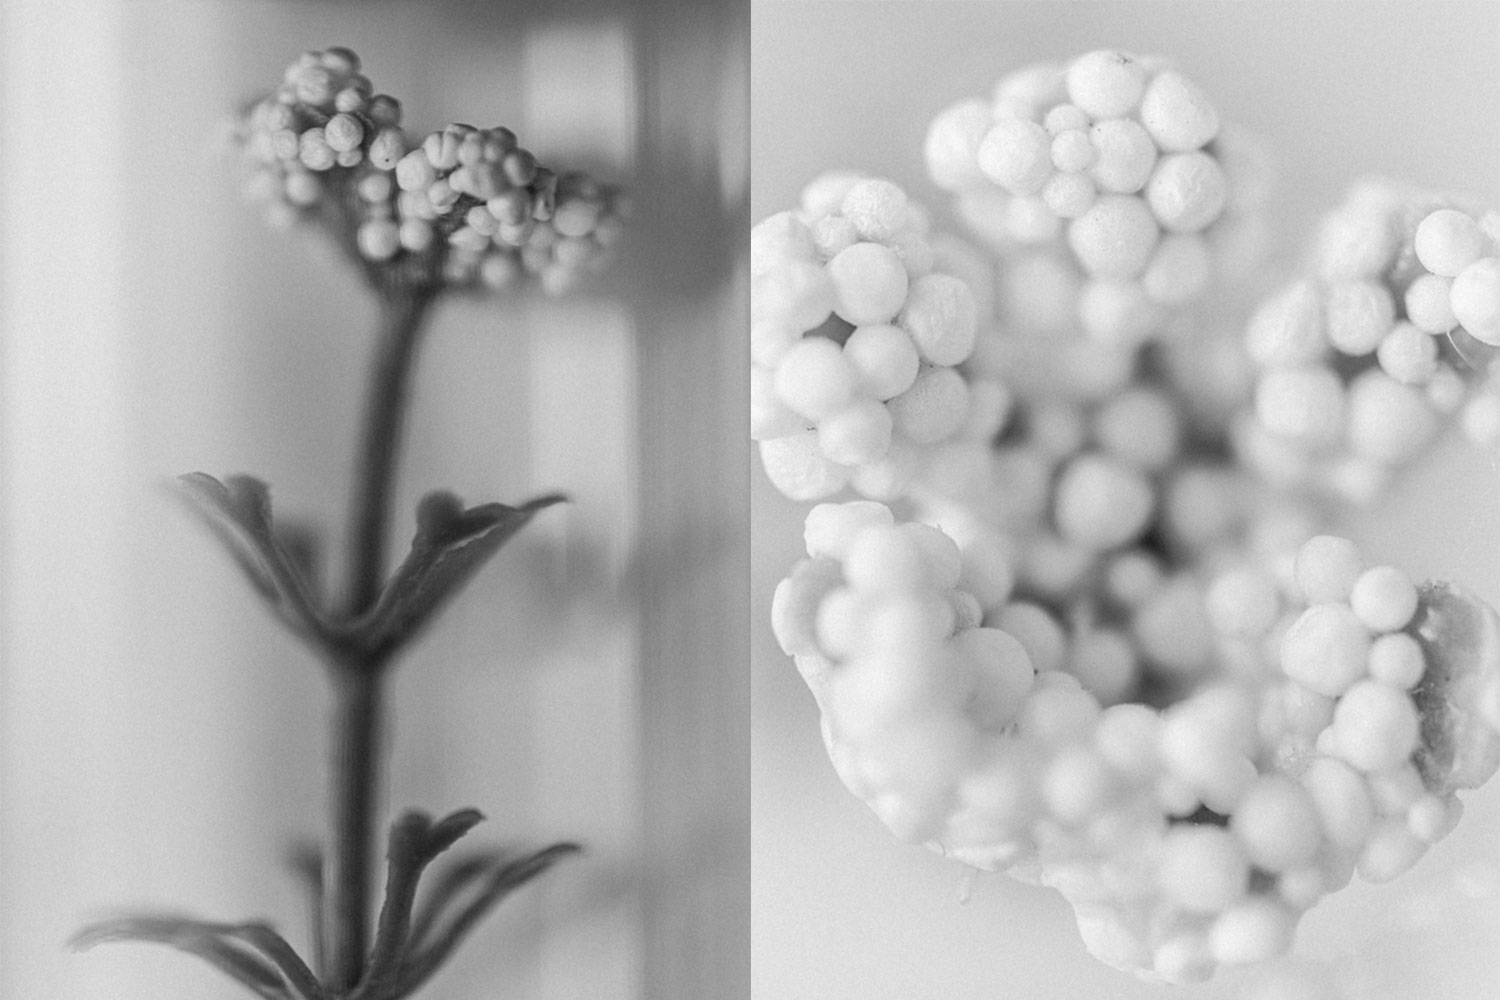 Fine art spheres plastic plant black and white.